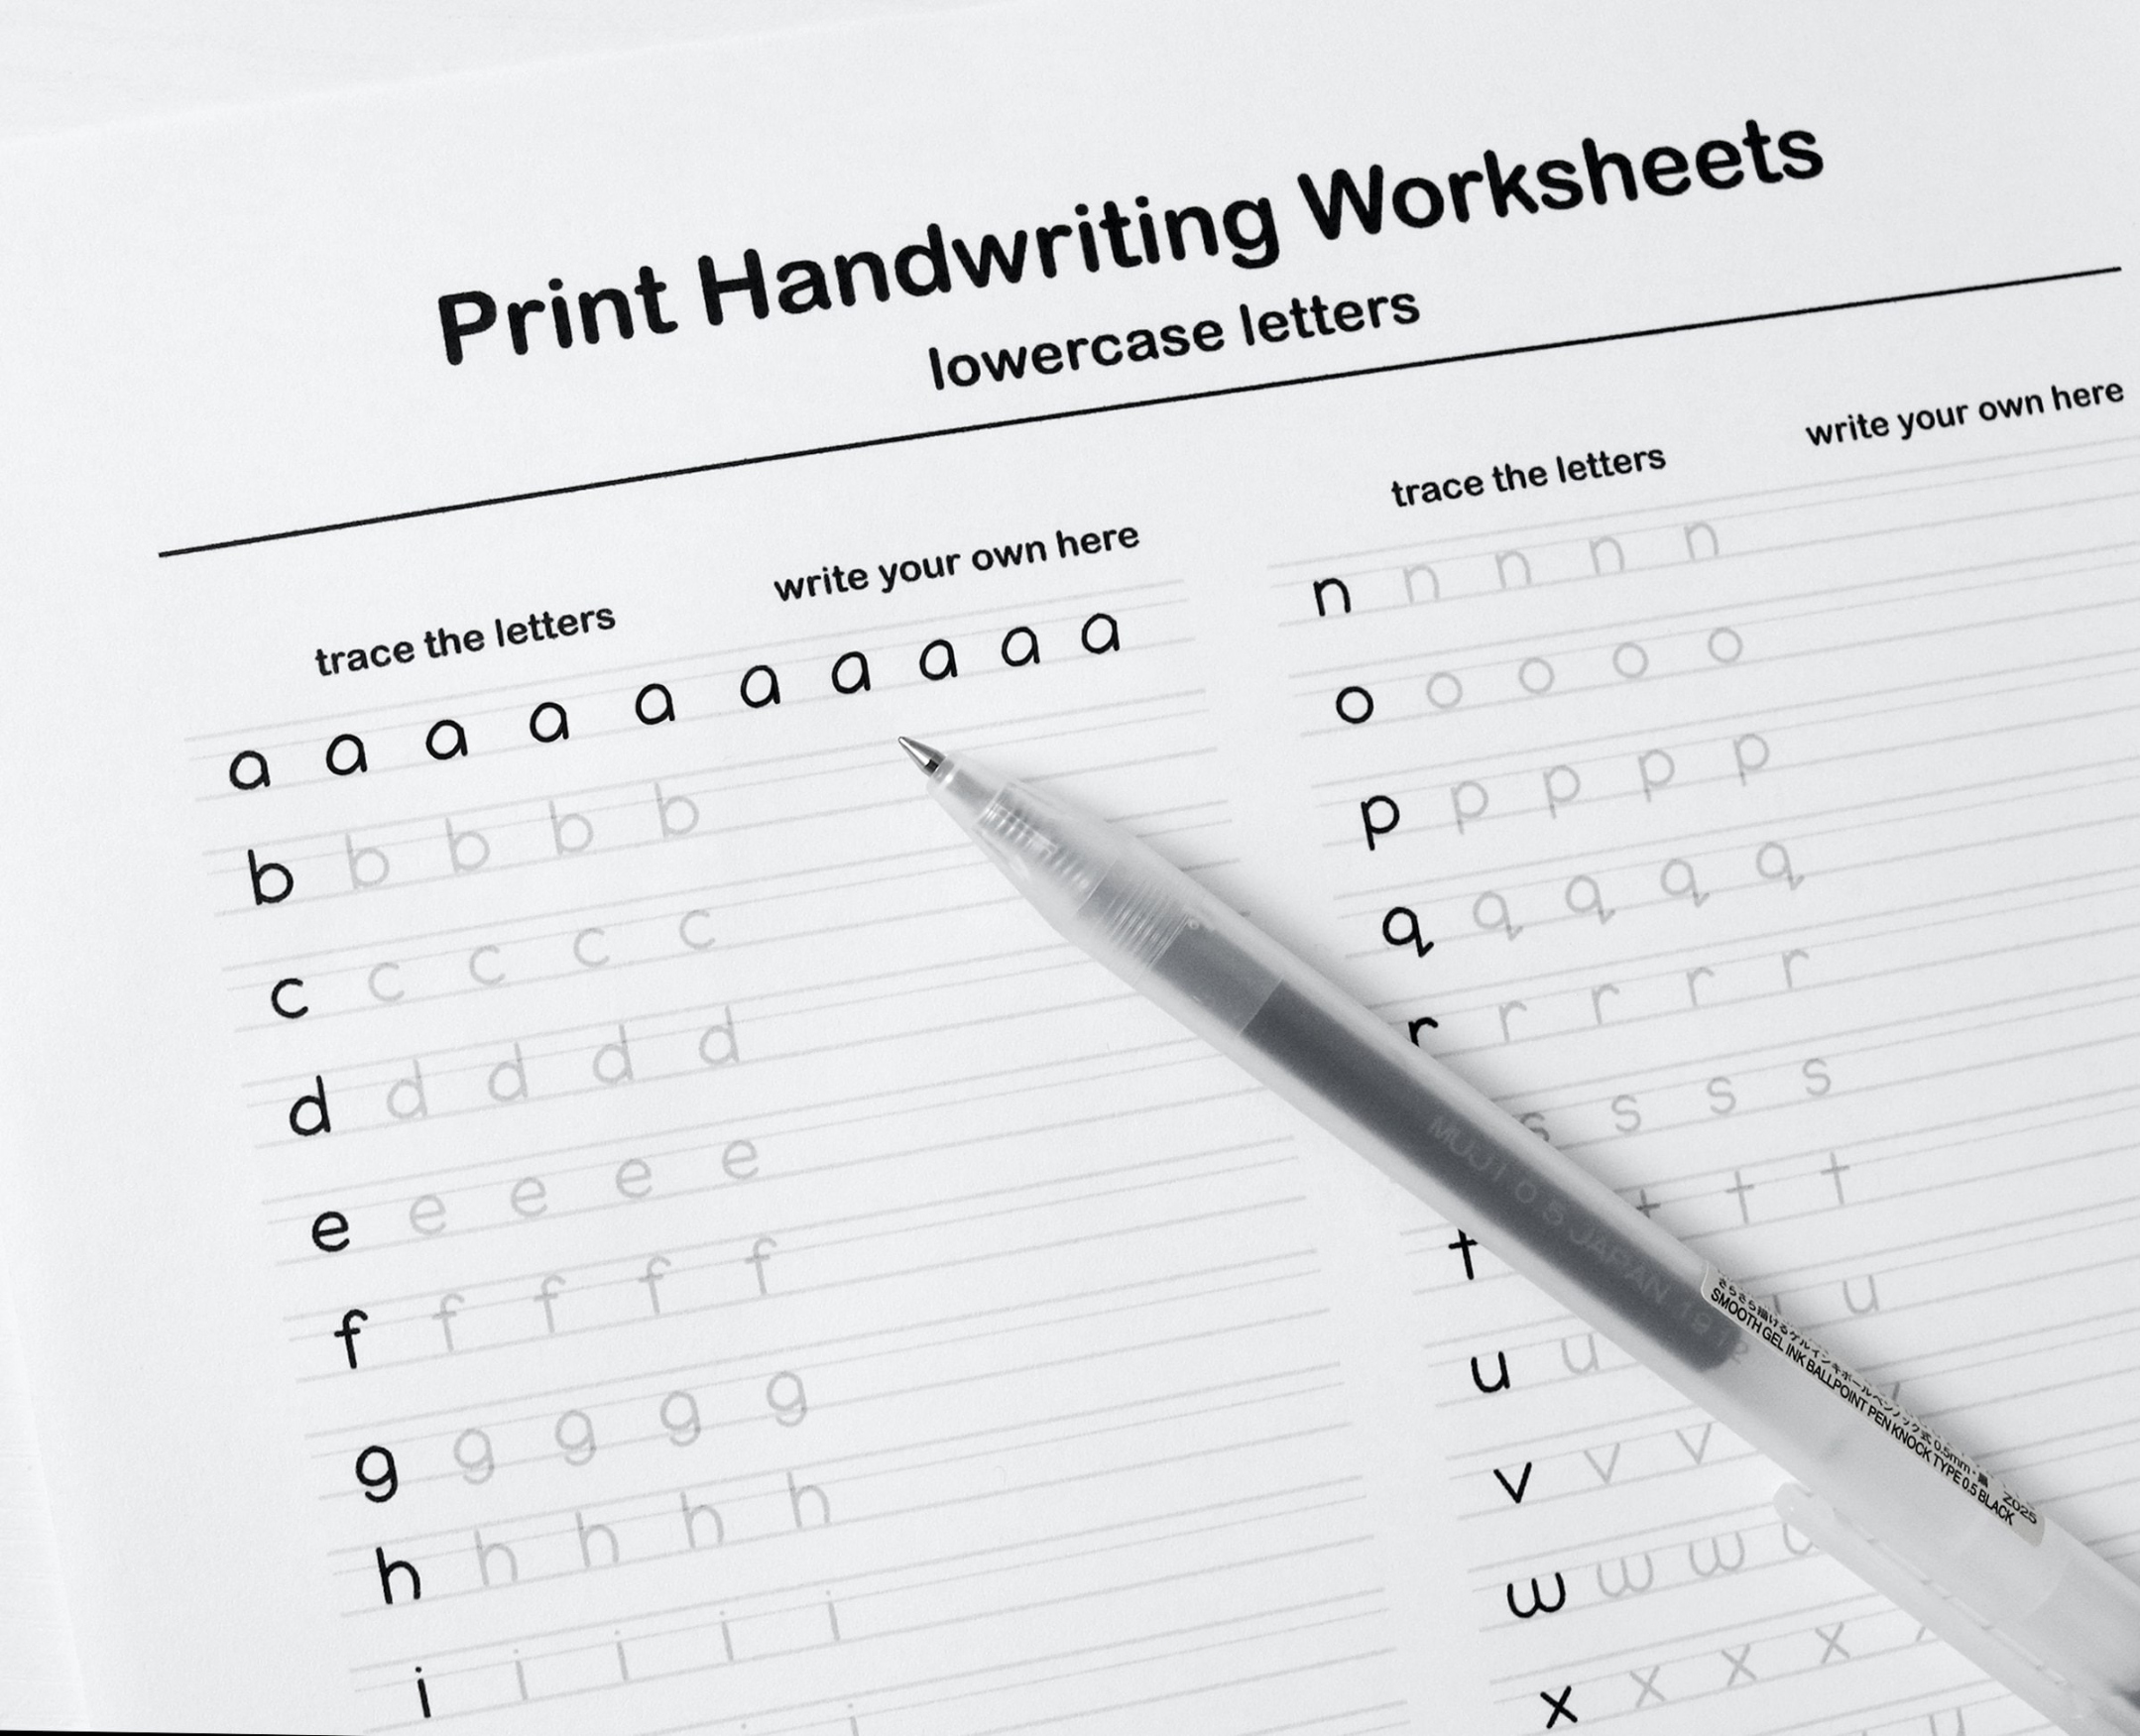 Free Printable Handwriting Worksheets - Printable - Printable Handwriting Worksheets Pages Letters Words and - Etsy